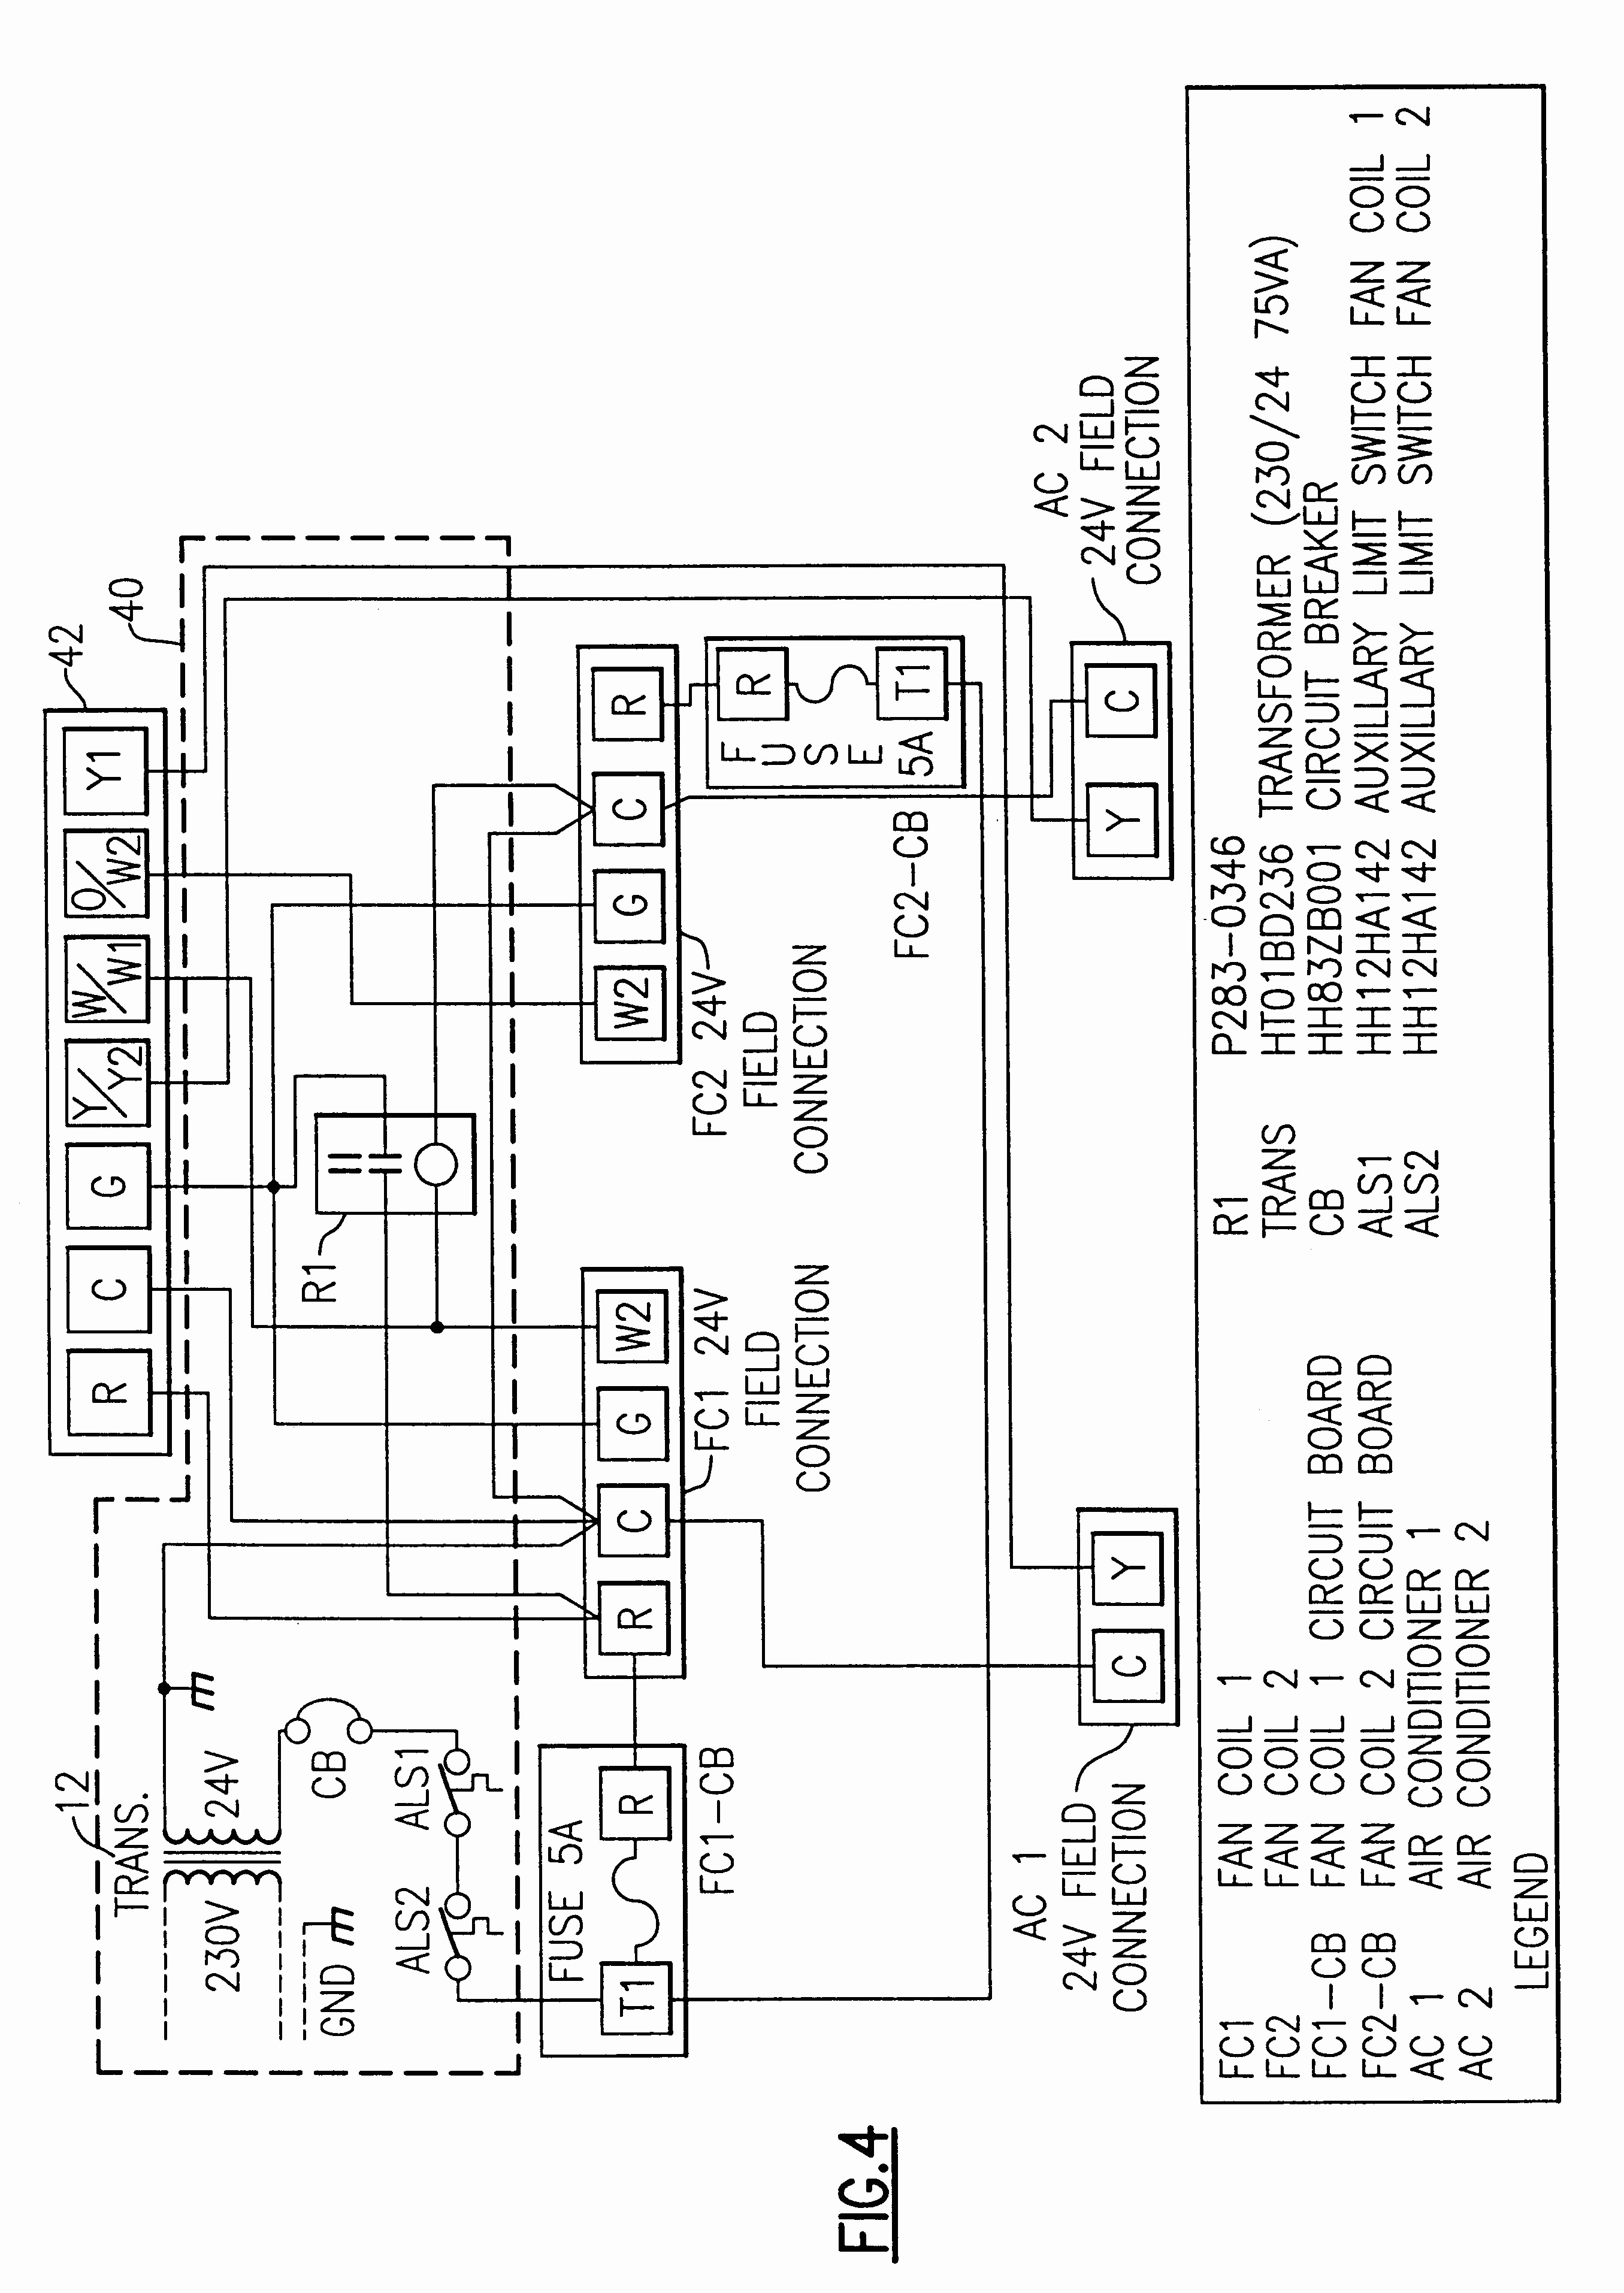 Acme Transformer Kva Wiring Diagram | Best Wiring Library - Acme Transformer Wiring Diagram